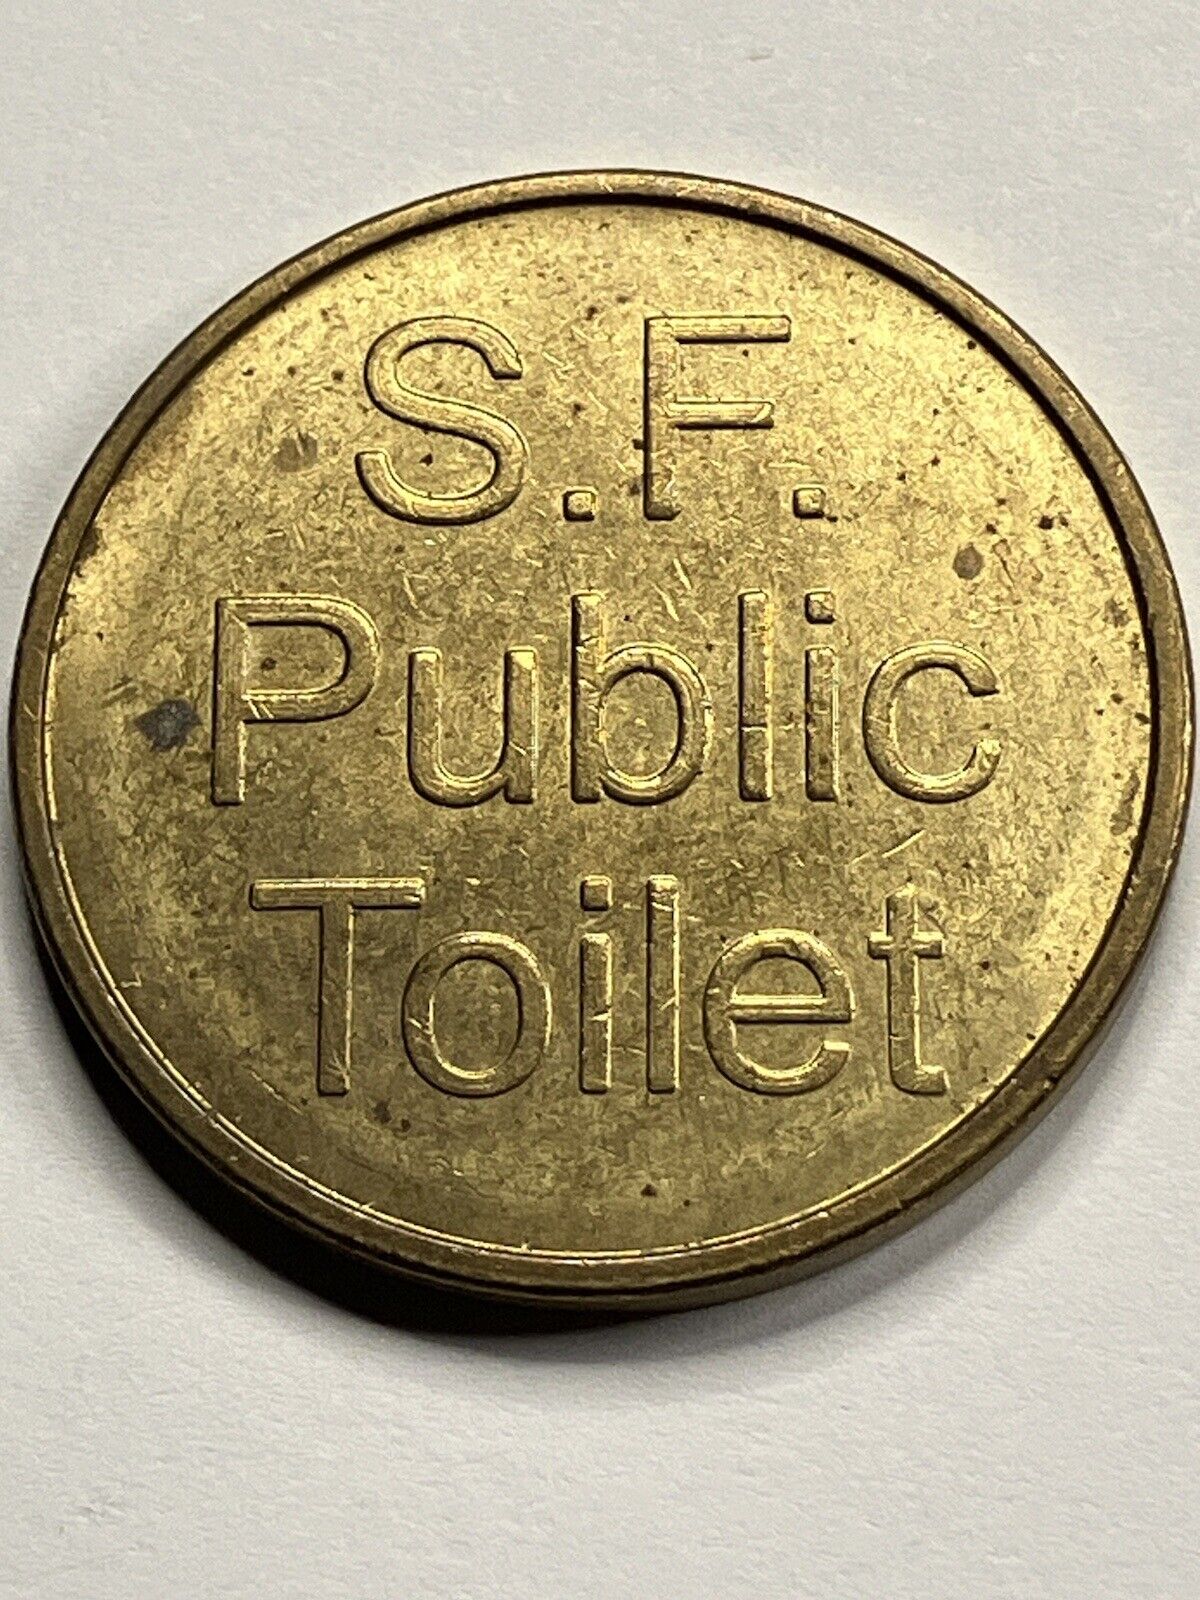 Vintage San Francisco Public Toilet Token #sq1